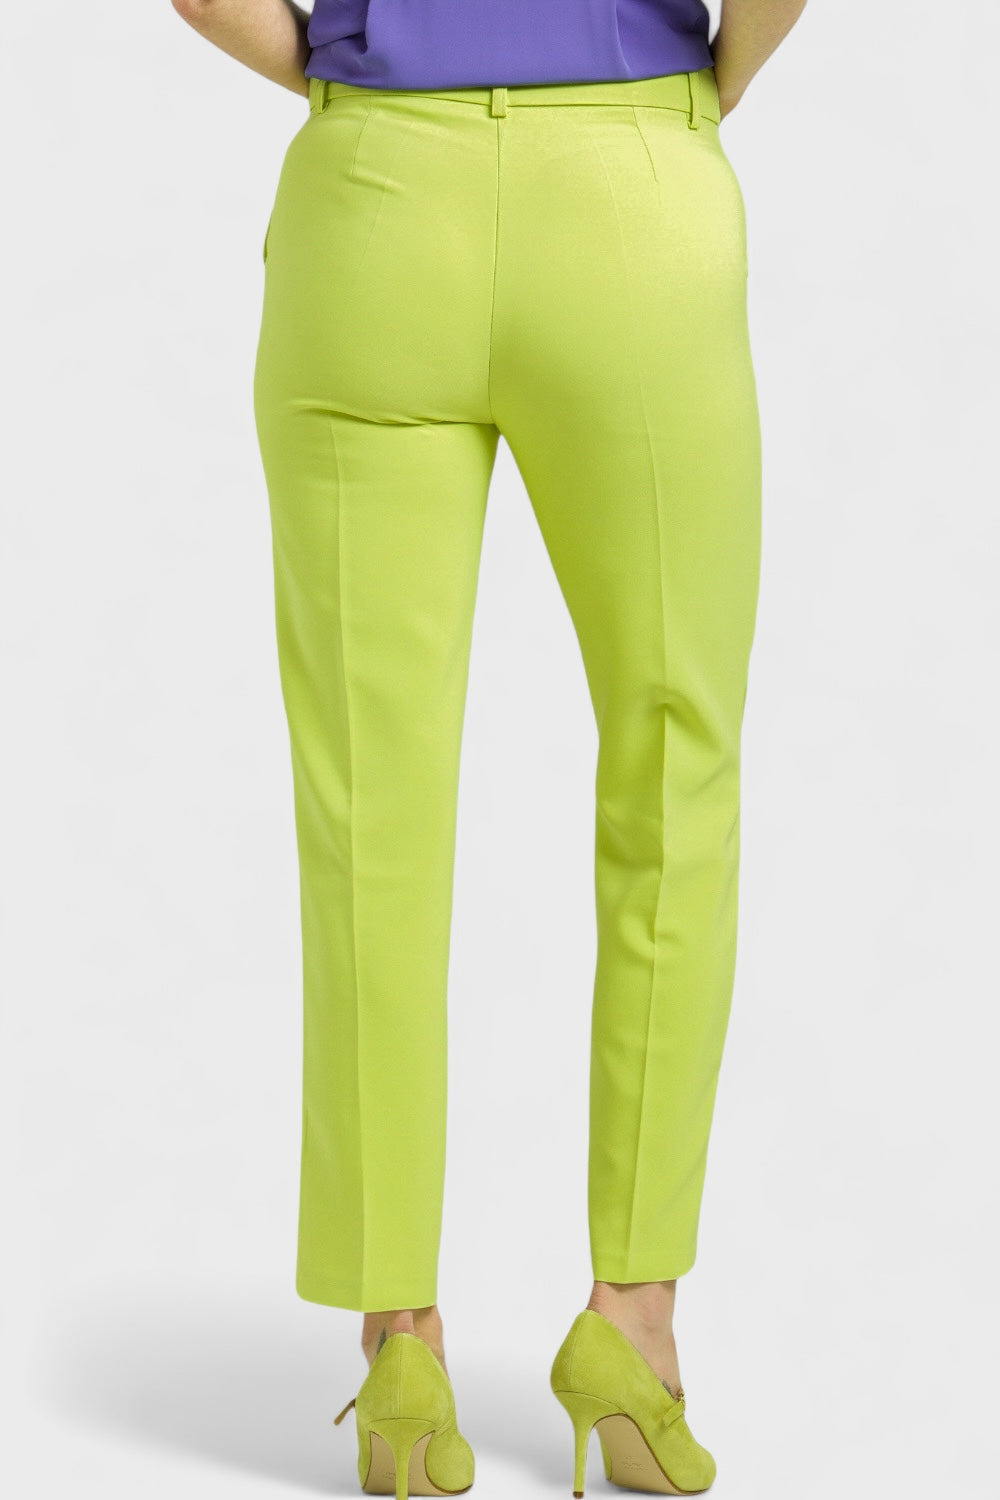 Victoria Lime Green Slim Trouser Pants by Enhle Italian Women's Clothing